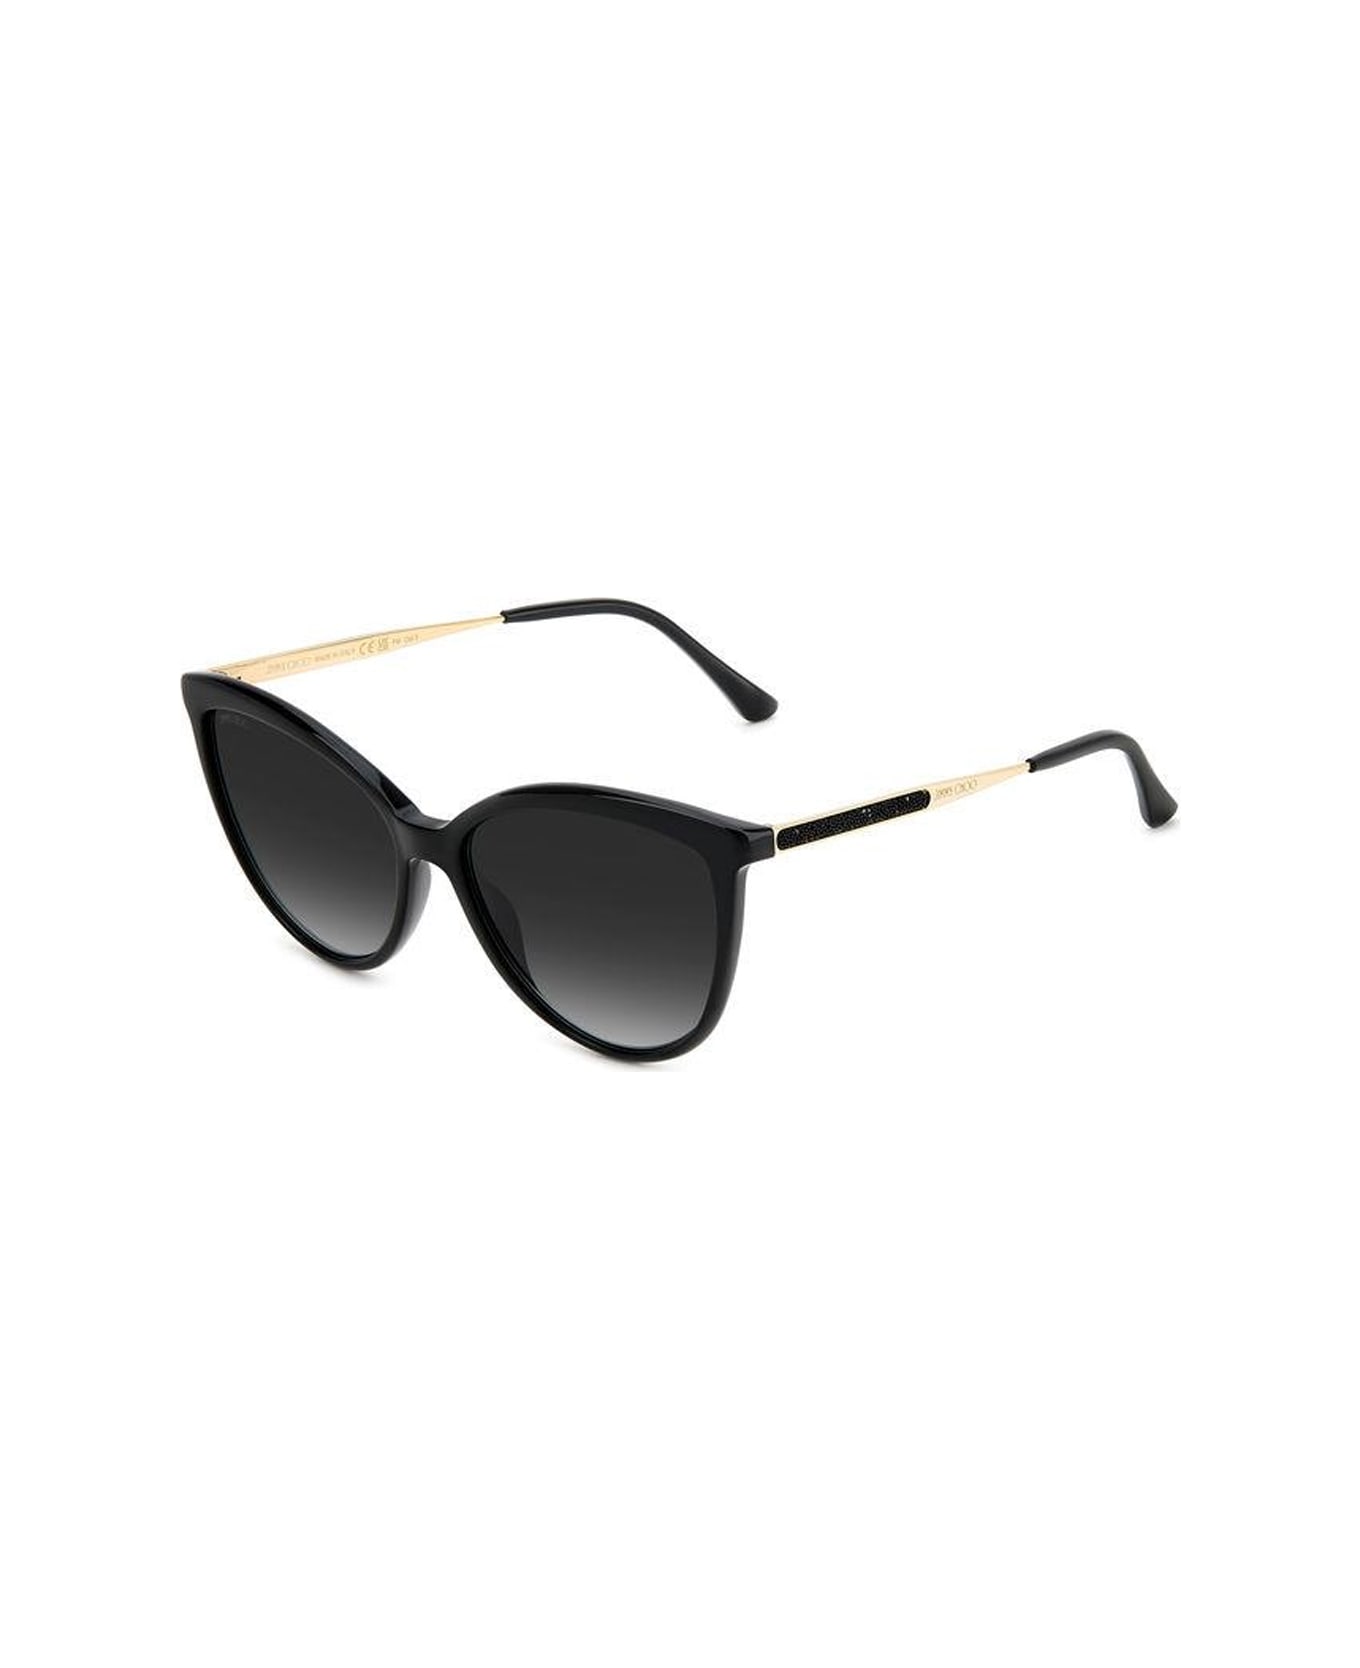 Square 1971 sunglasses Jc Belinda/s 807/9o Sunglasses - Nero